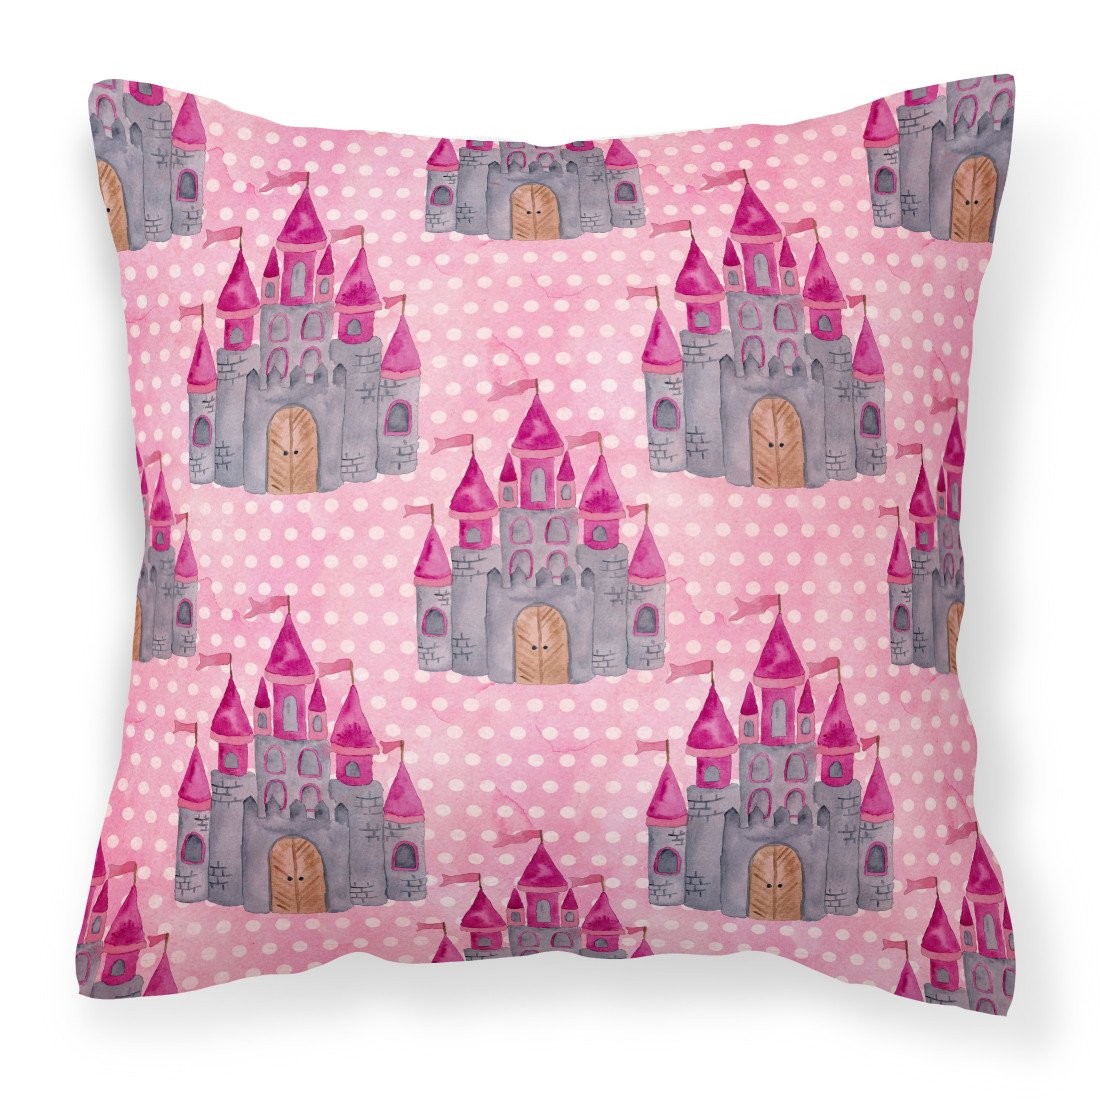 Watercolor Princess Castle Fabric Decorative Pillow BB7549PW1818 by Caroline's Treasures